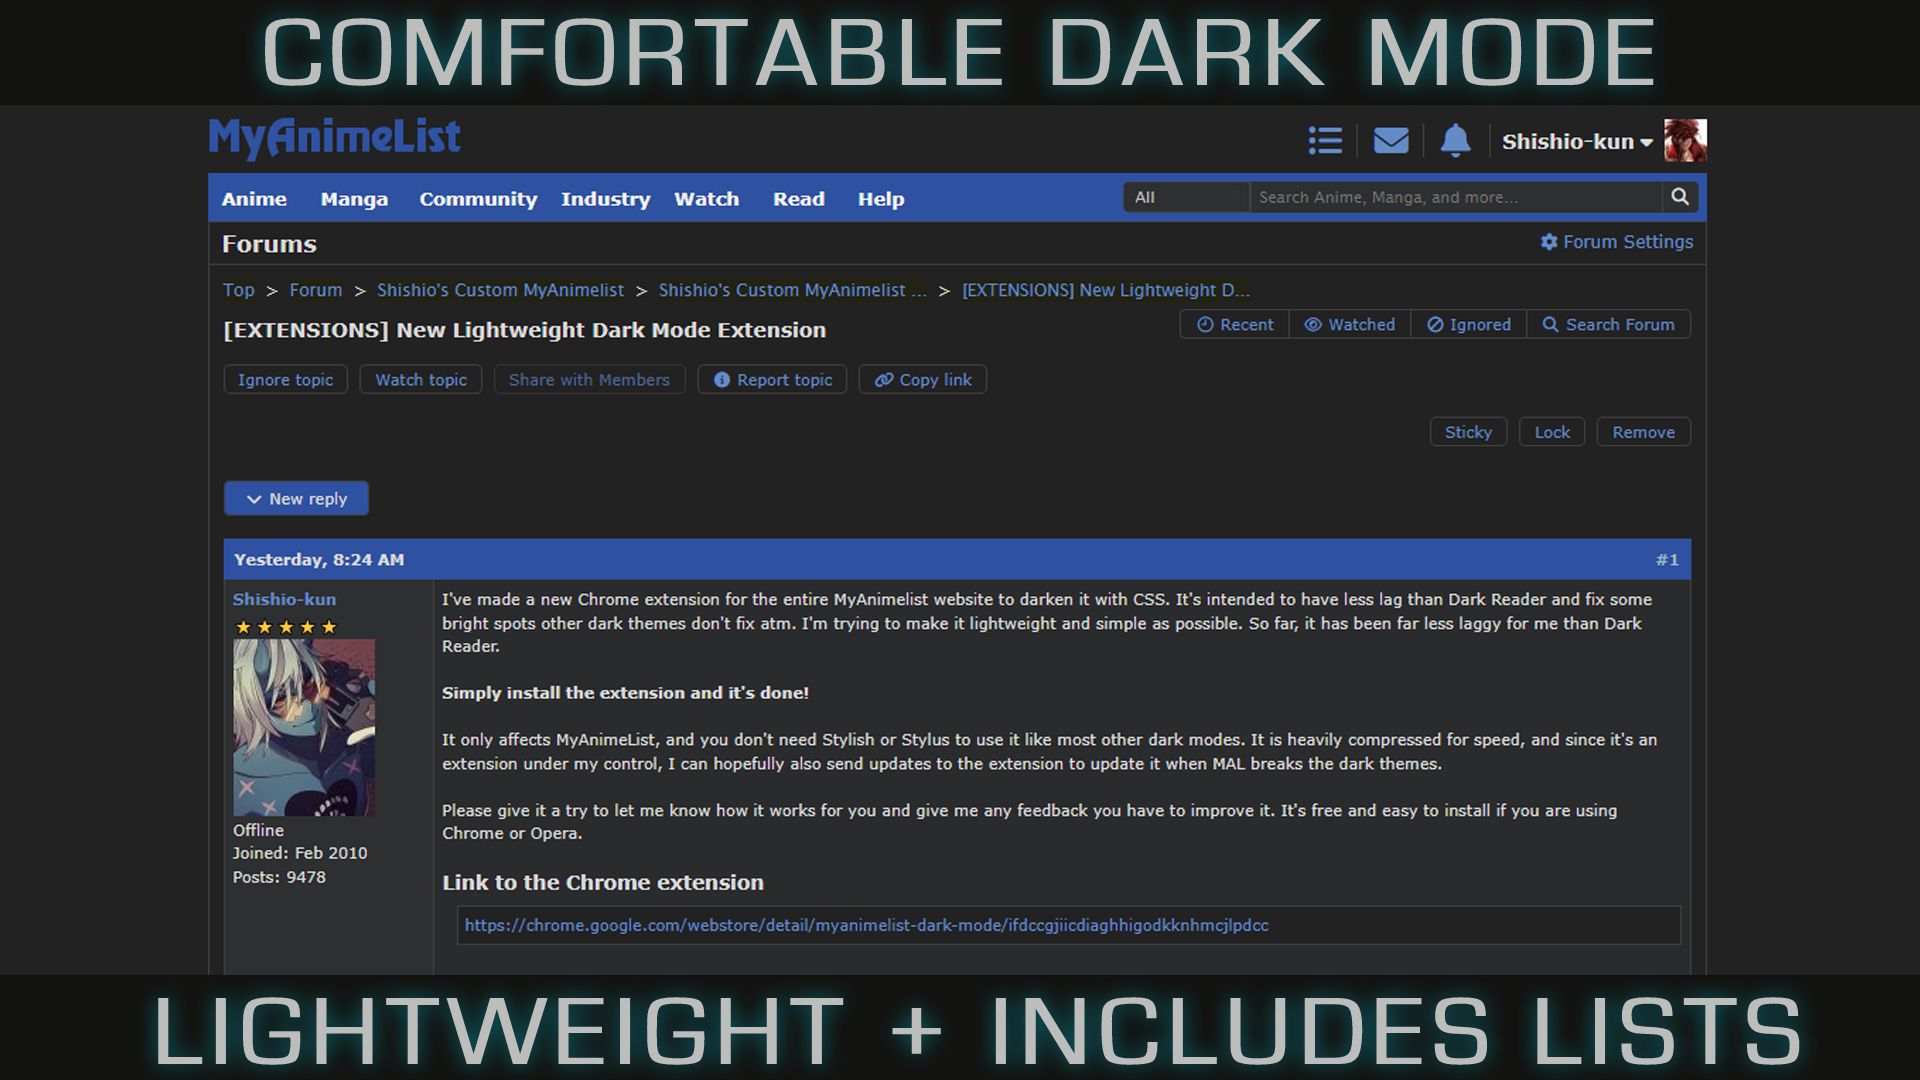 Screenshot of Comfortable Dark Mode - Includes Lists